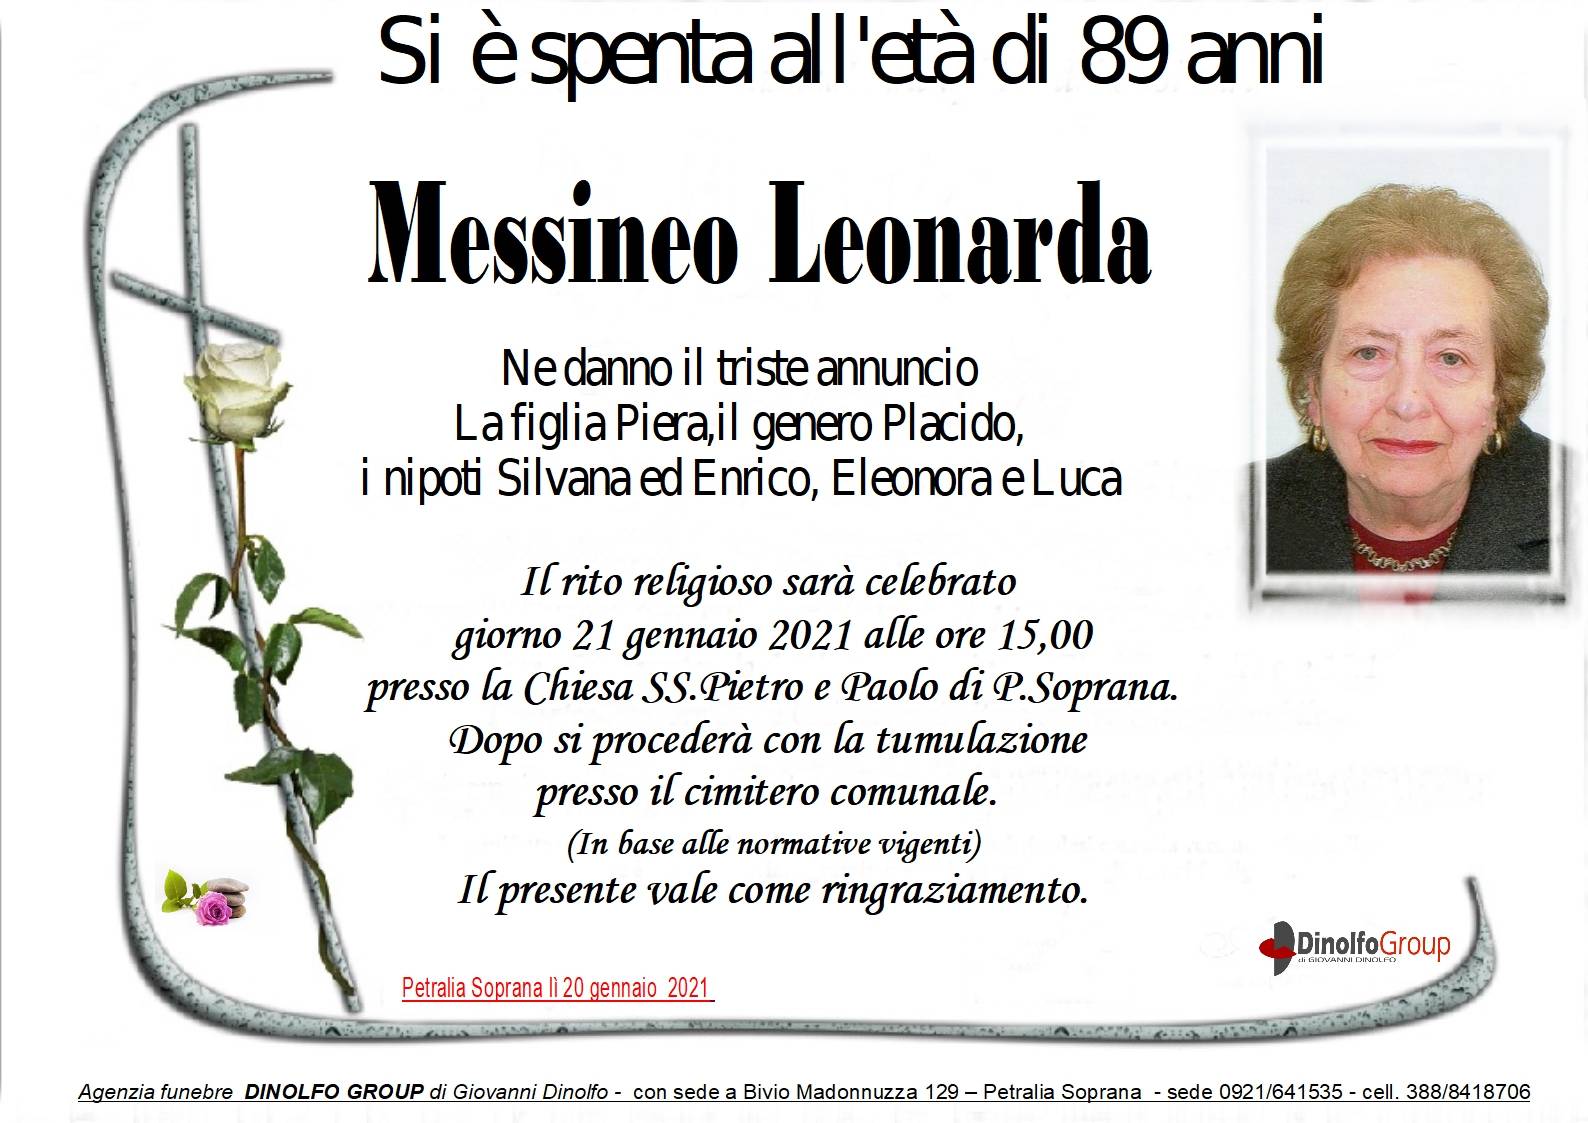 Leonarda Messineo